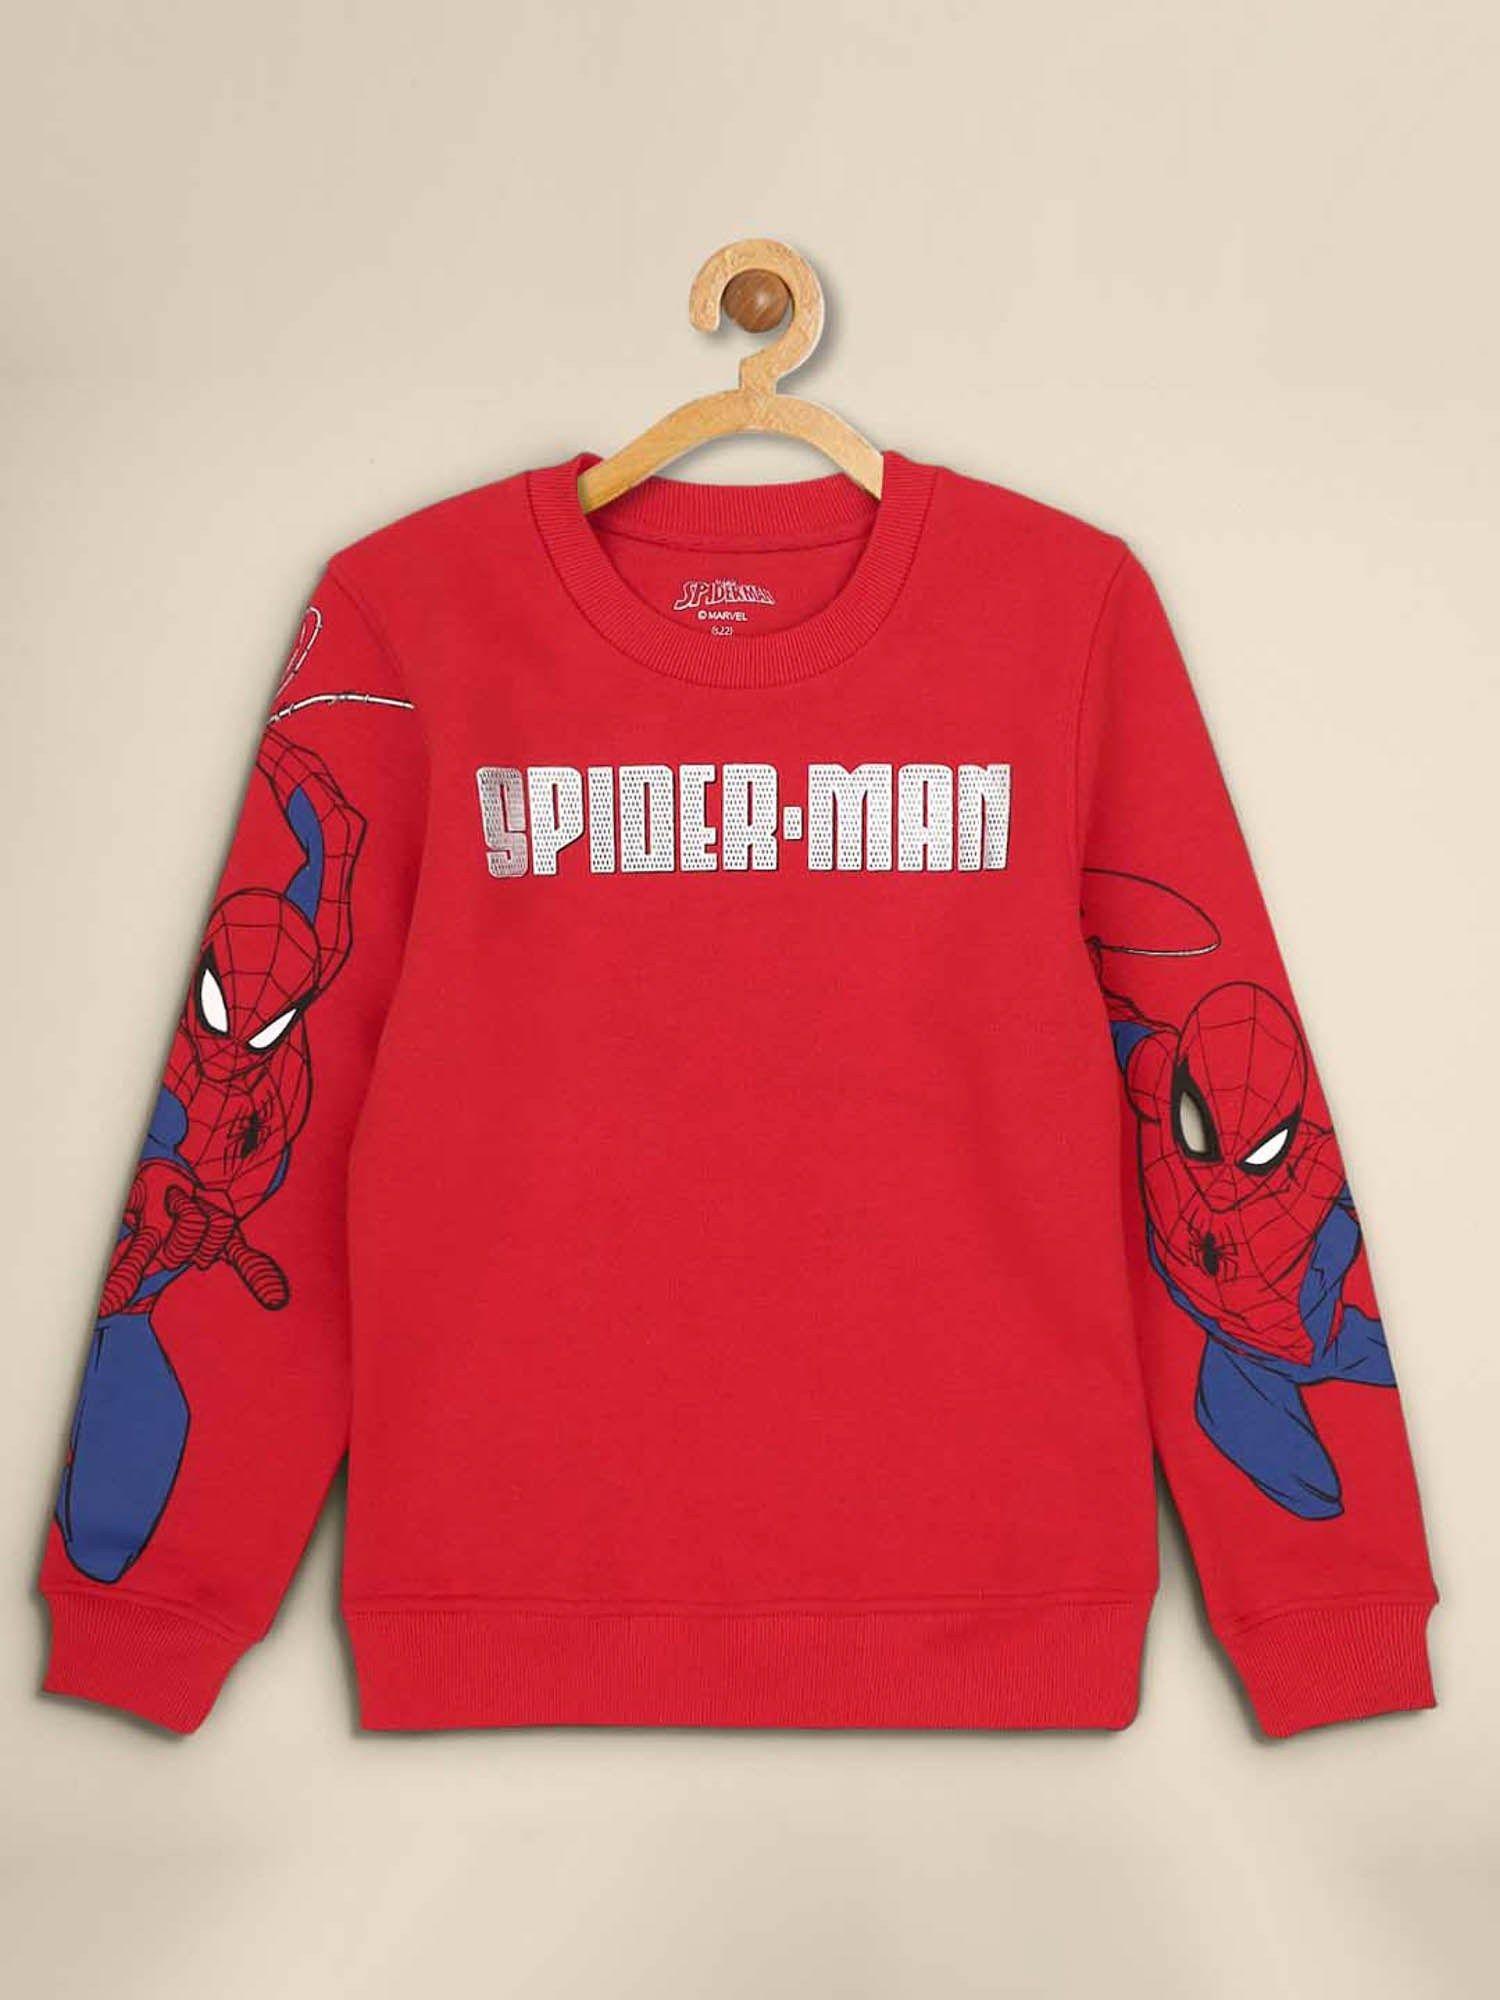 spiderman-printed-red-sweatshirt-for-boys